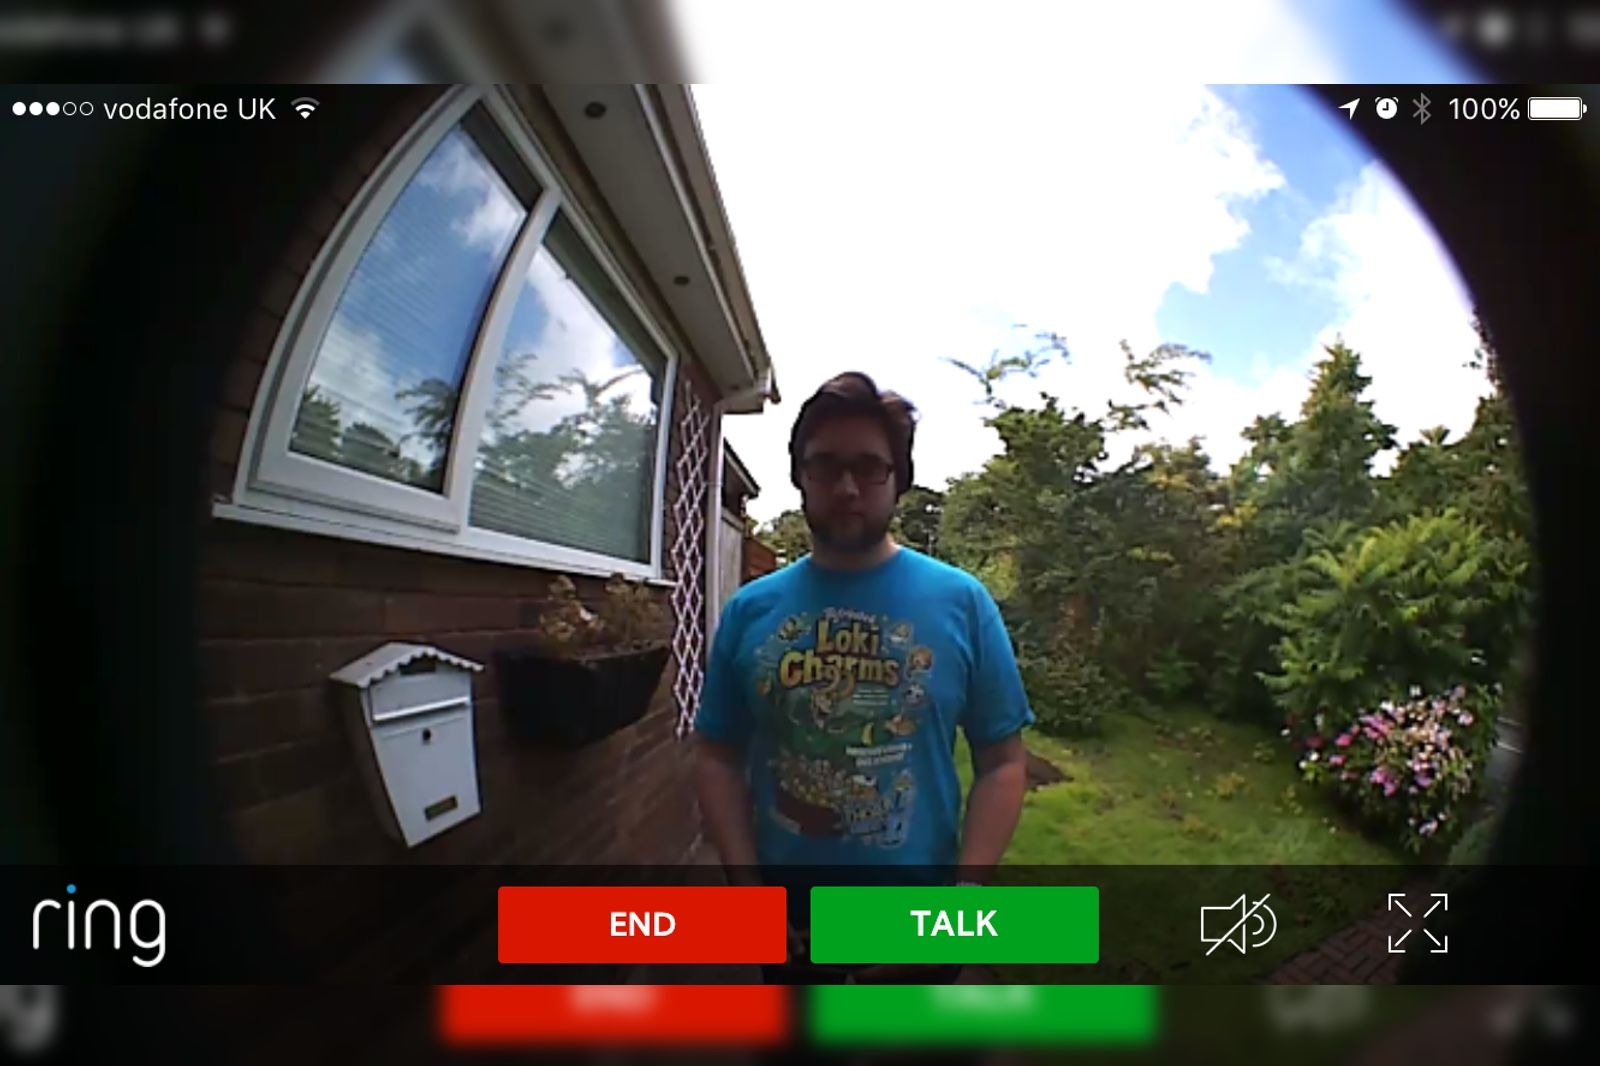 ring video doorbell review image 11